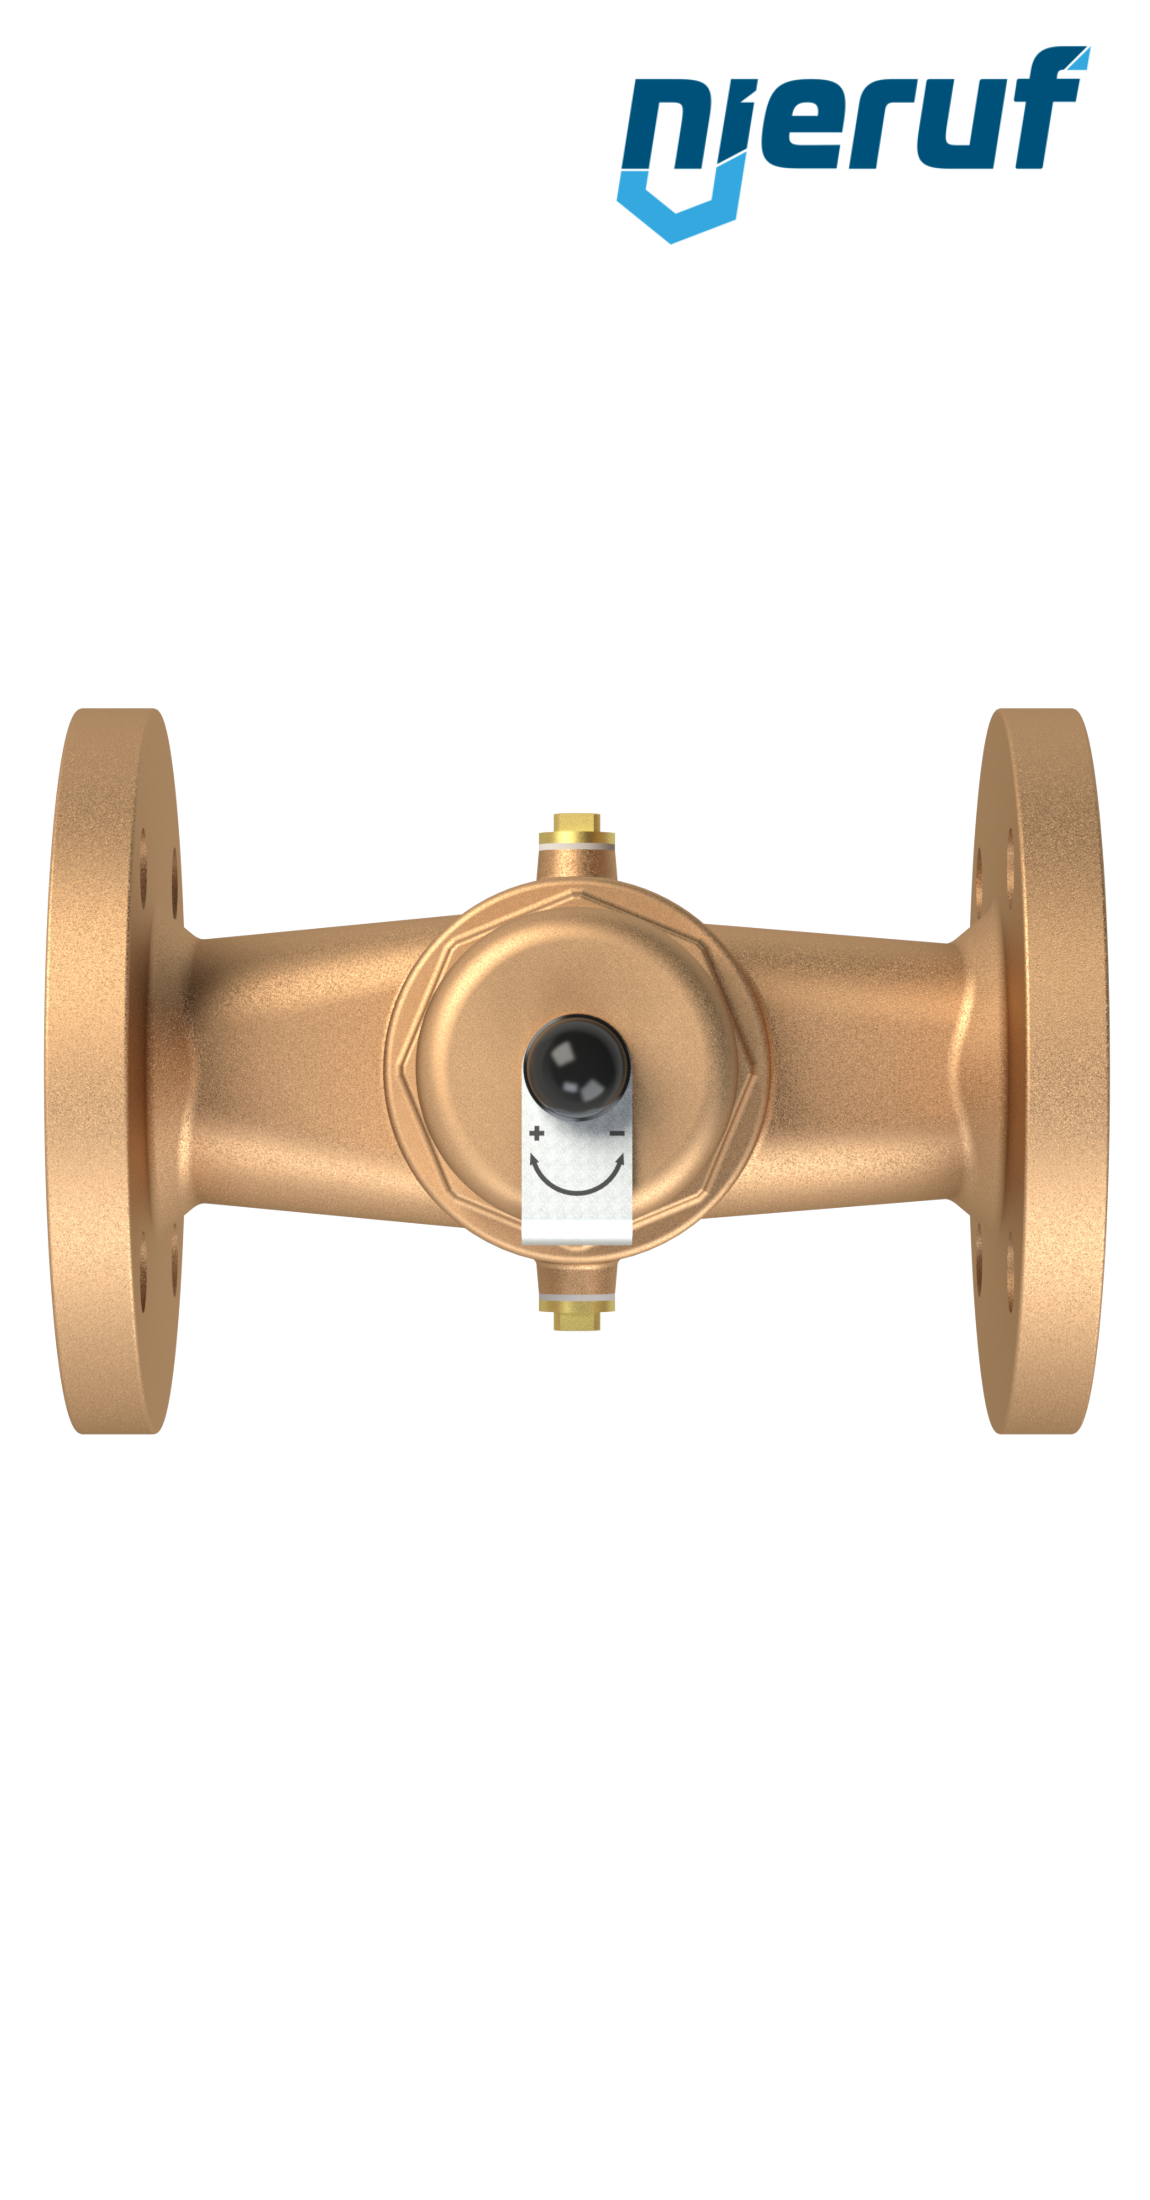 Flange-pressure reducing valve DN 25 PN16 DM05 gunmetal/brass EPDM 1.0 - 8.0 bar